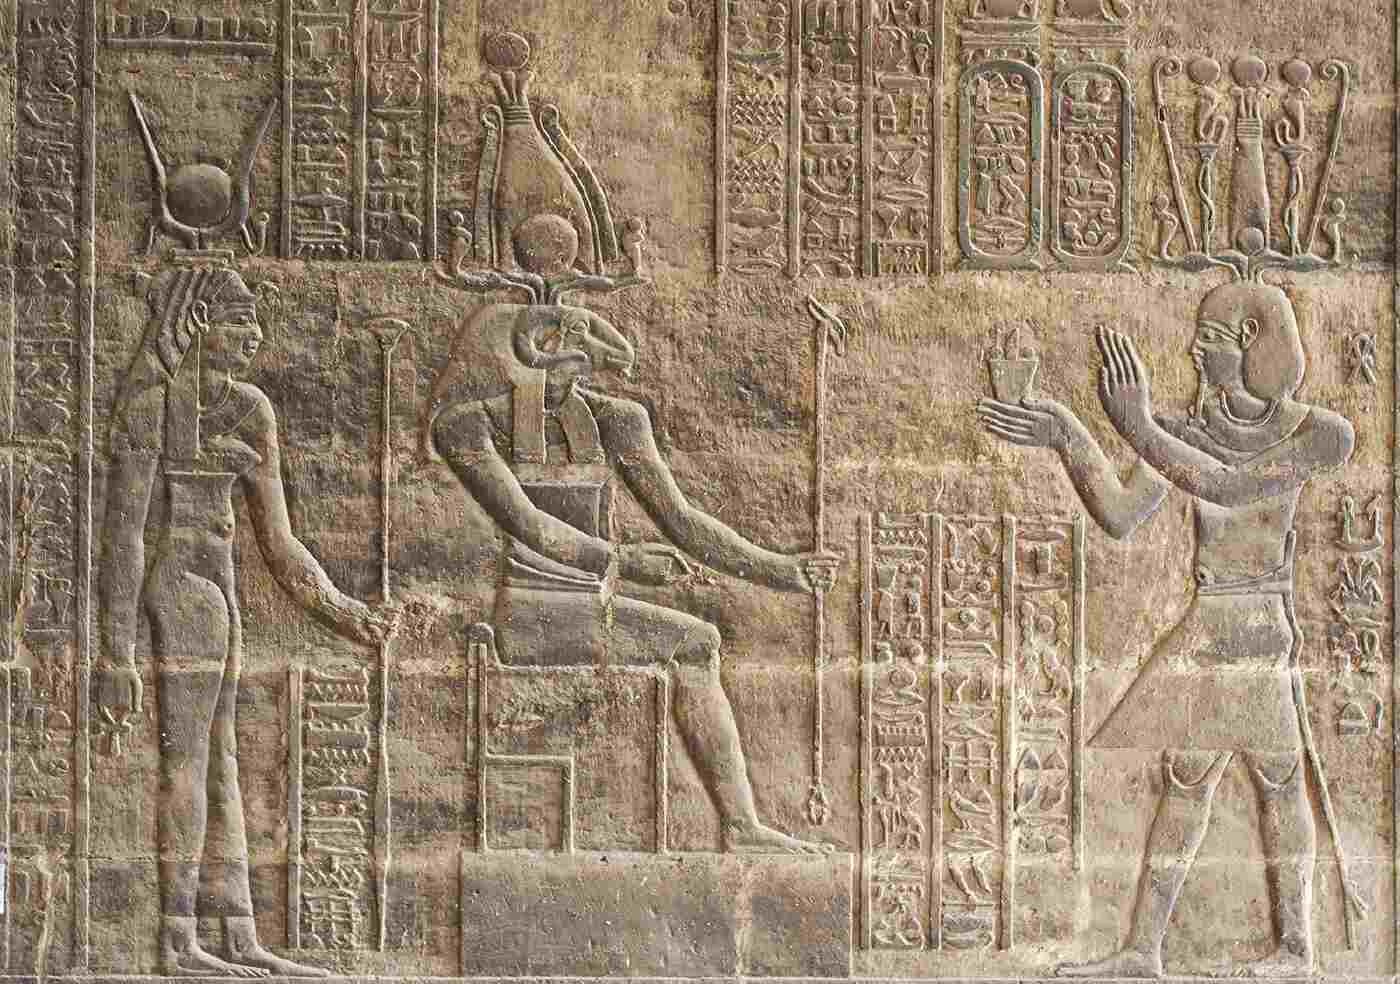 Fertility gods in Ancient Egypt